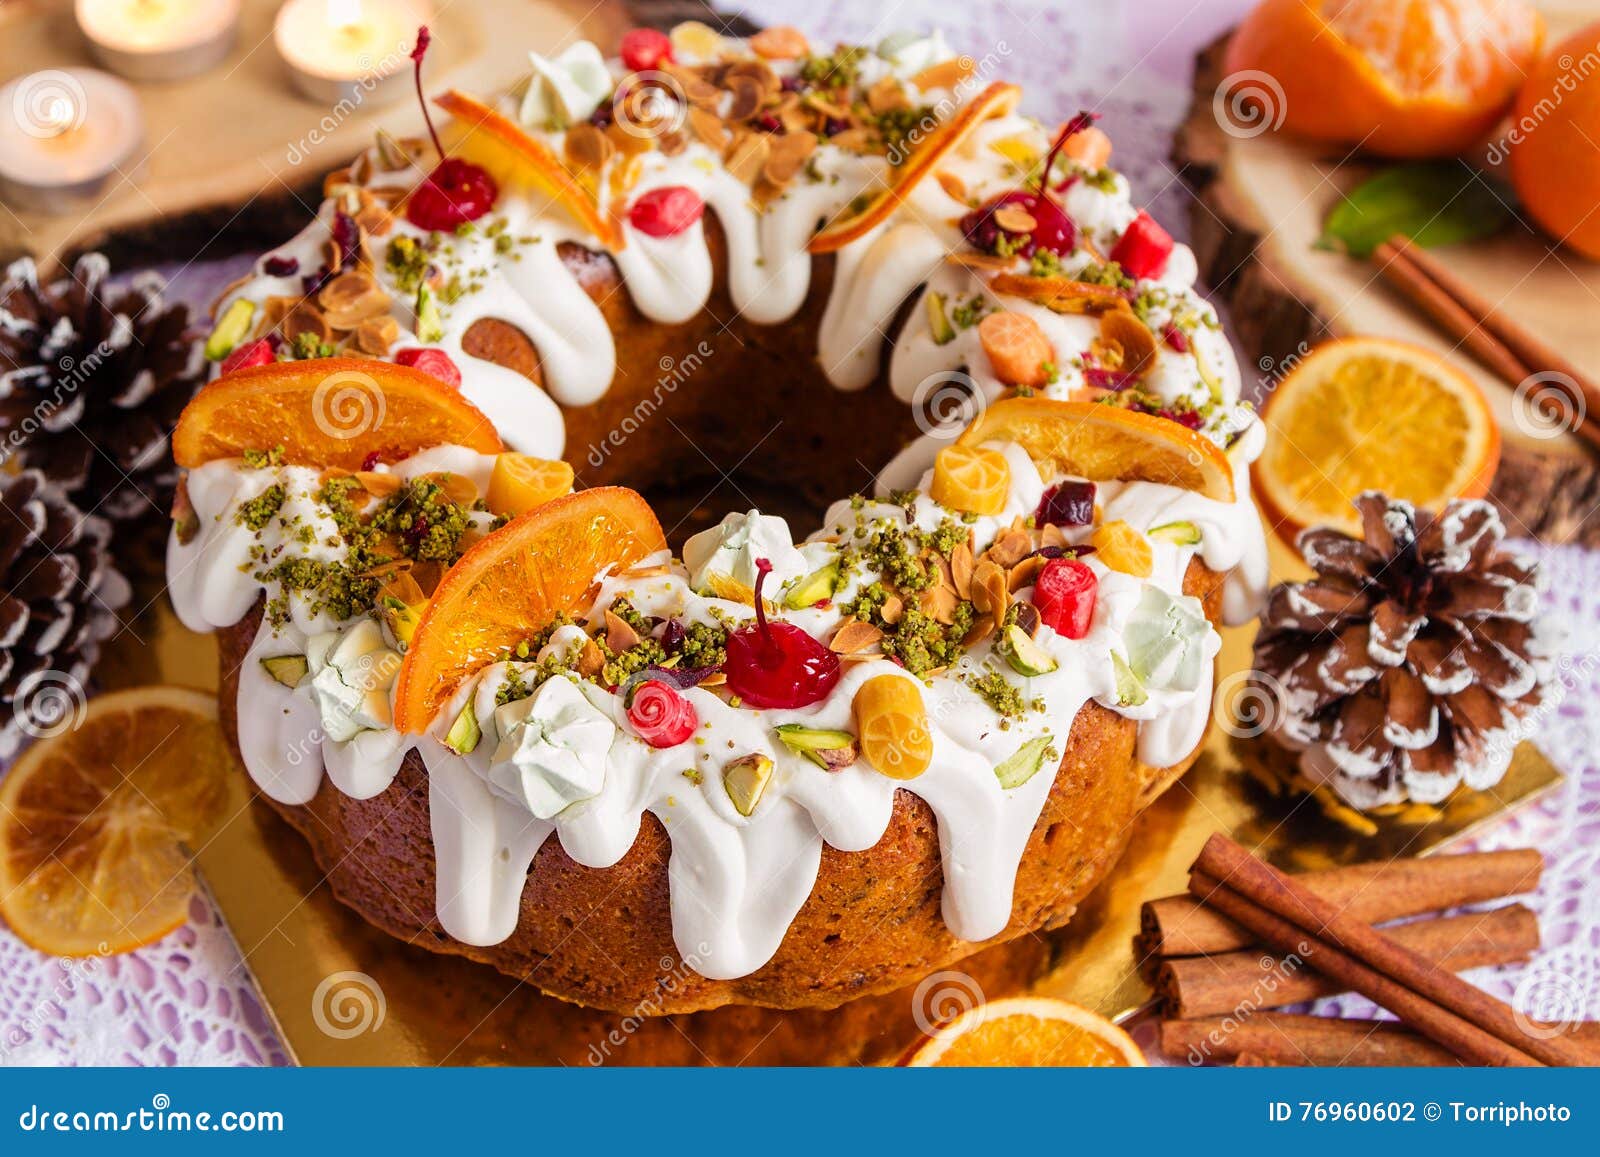 Traditional Christmas Bundt Cake Stock Photo Image Of Holiday Cherries 76960602